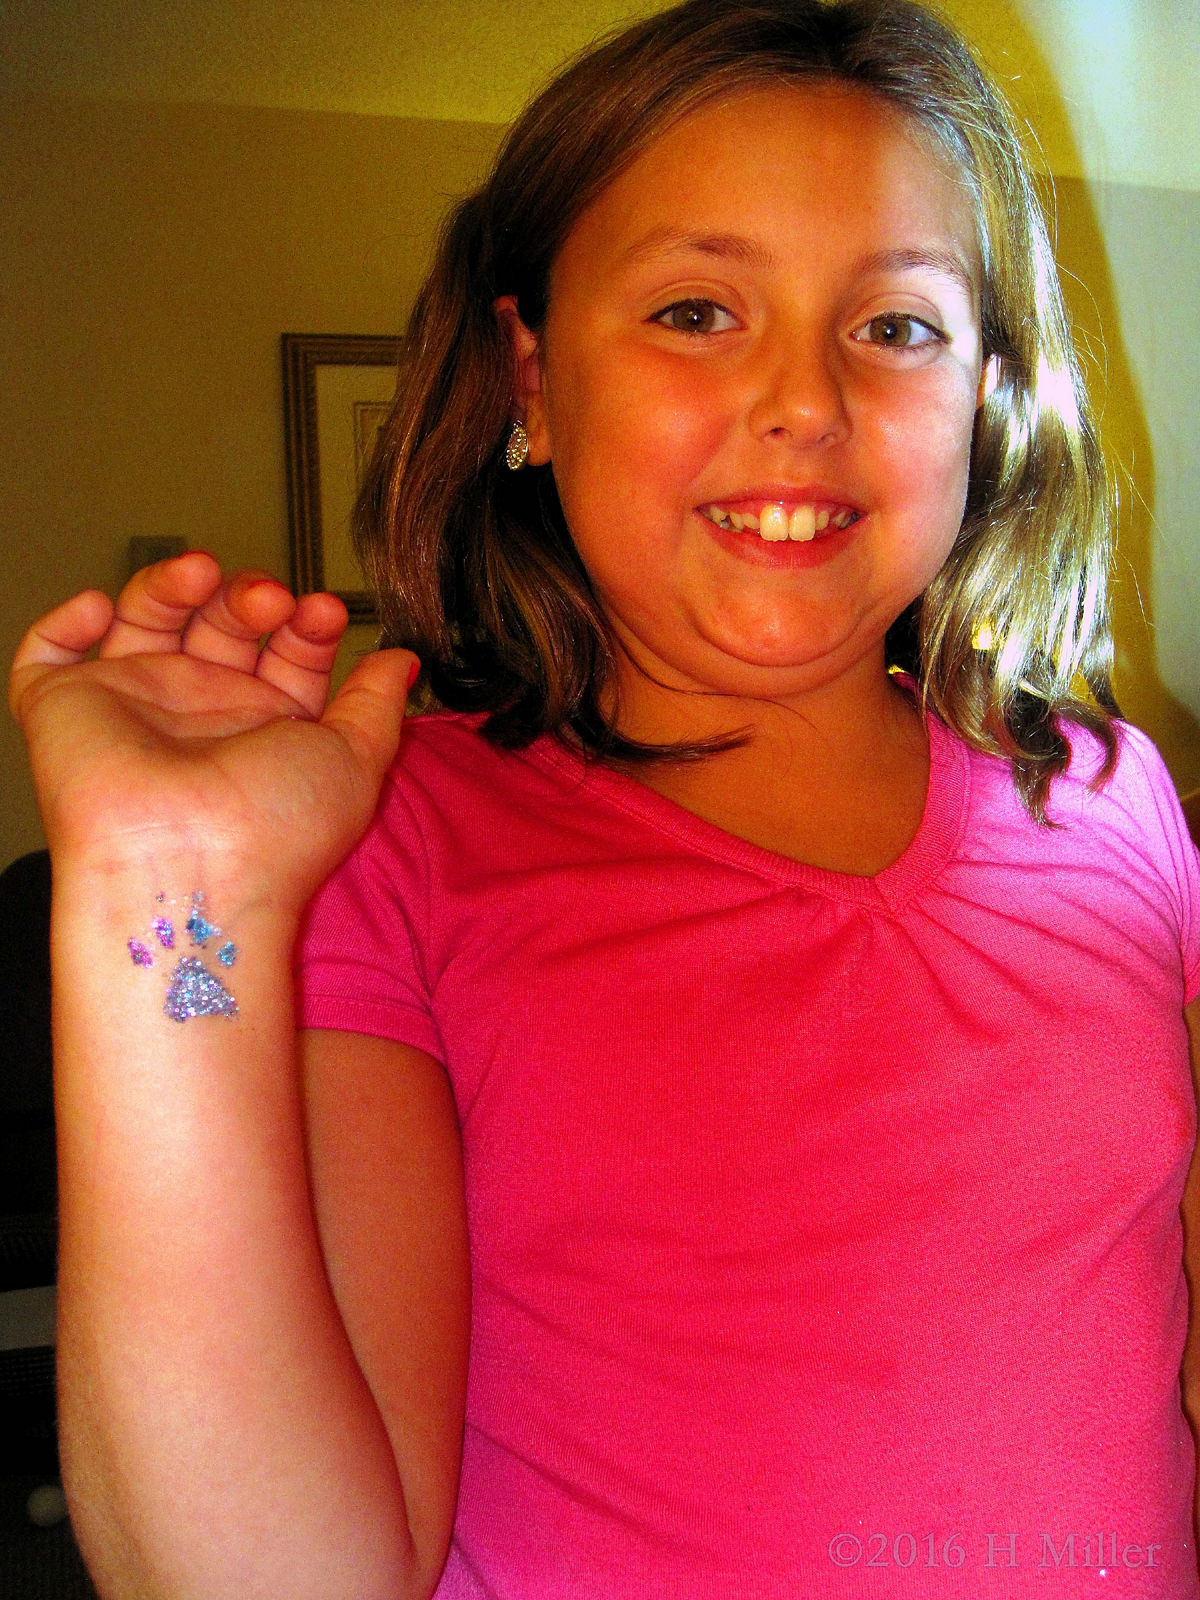 She's Loving Her Home Kids Spa Pawprint Tattoo 